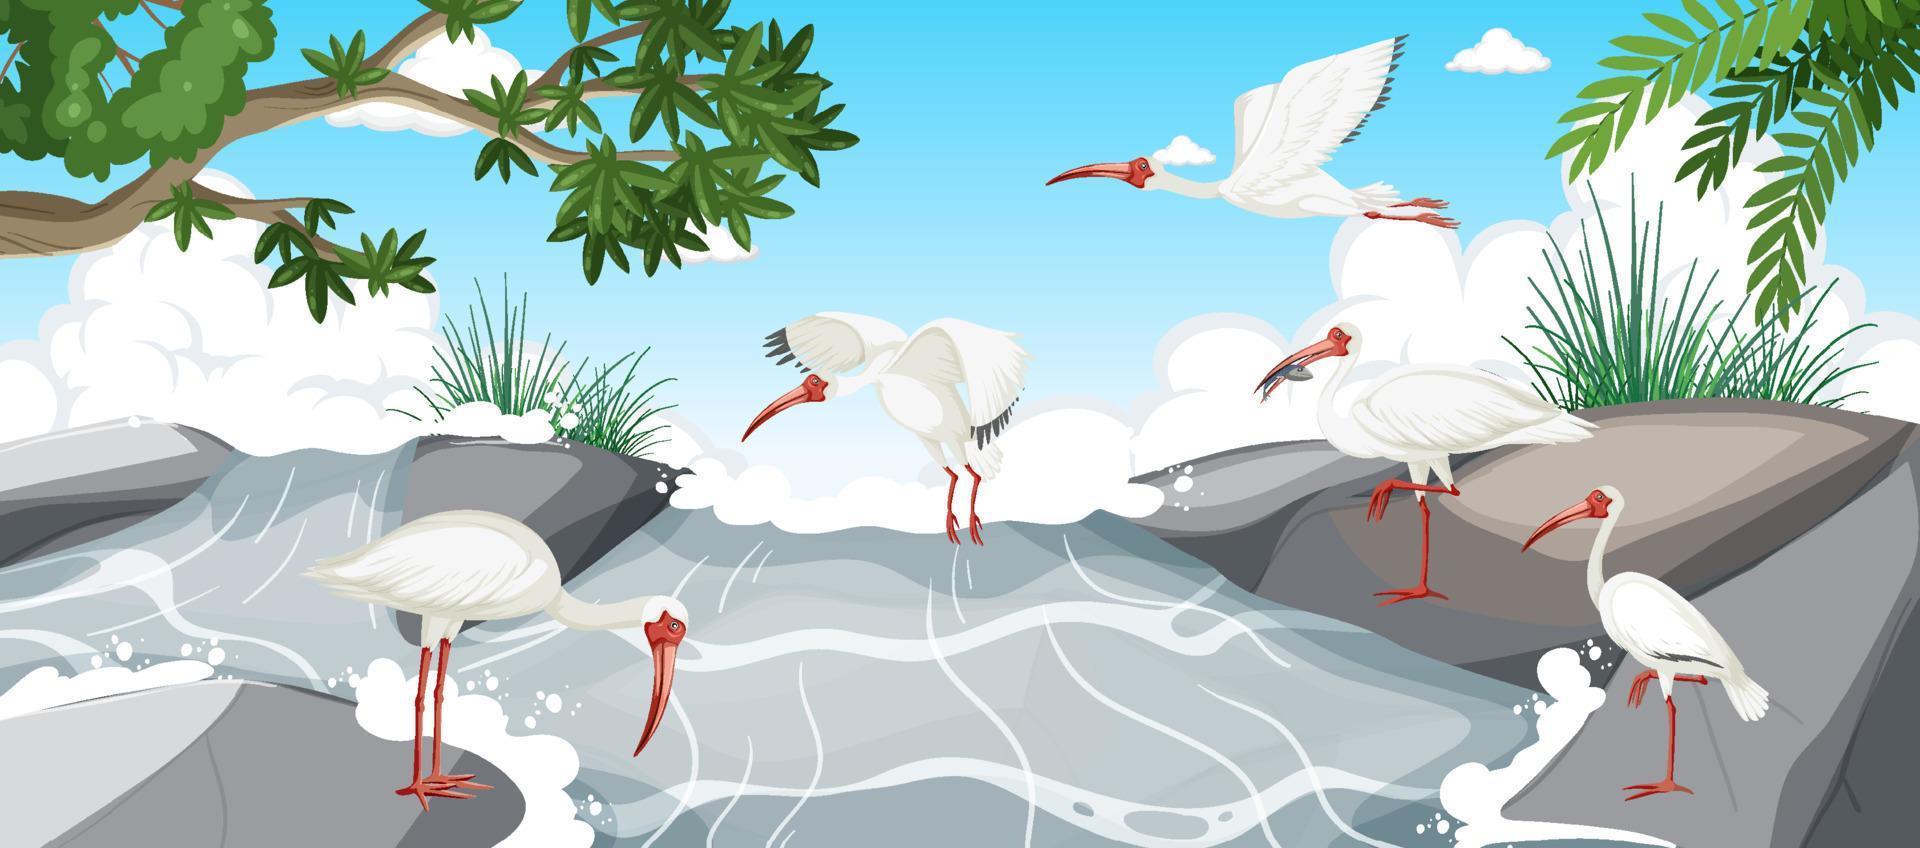 amerikansk vit ibis-grupp i skogen vektor